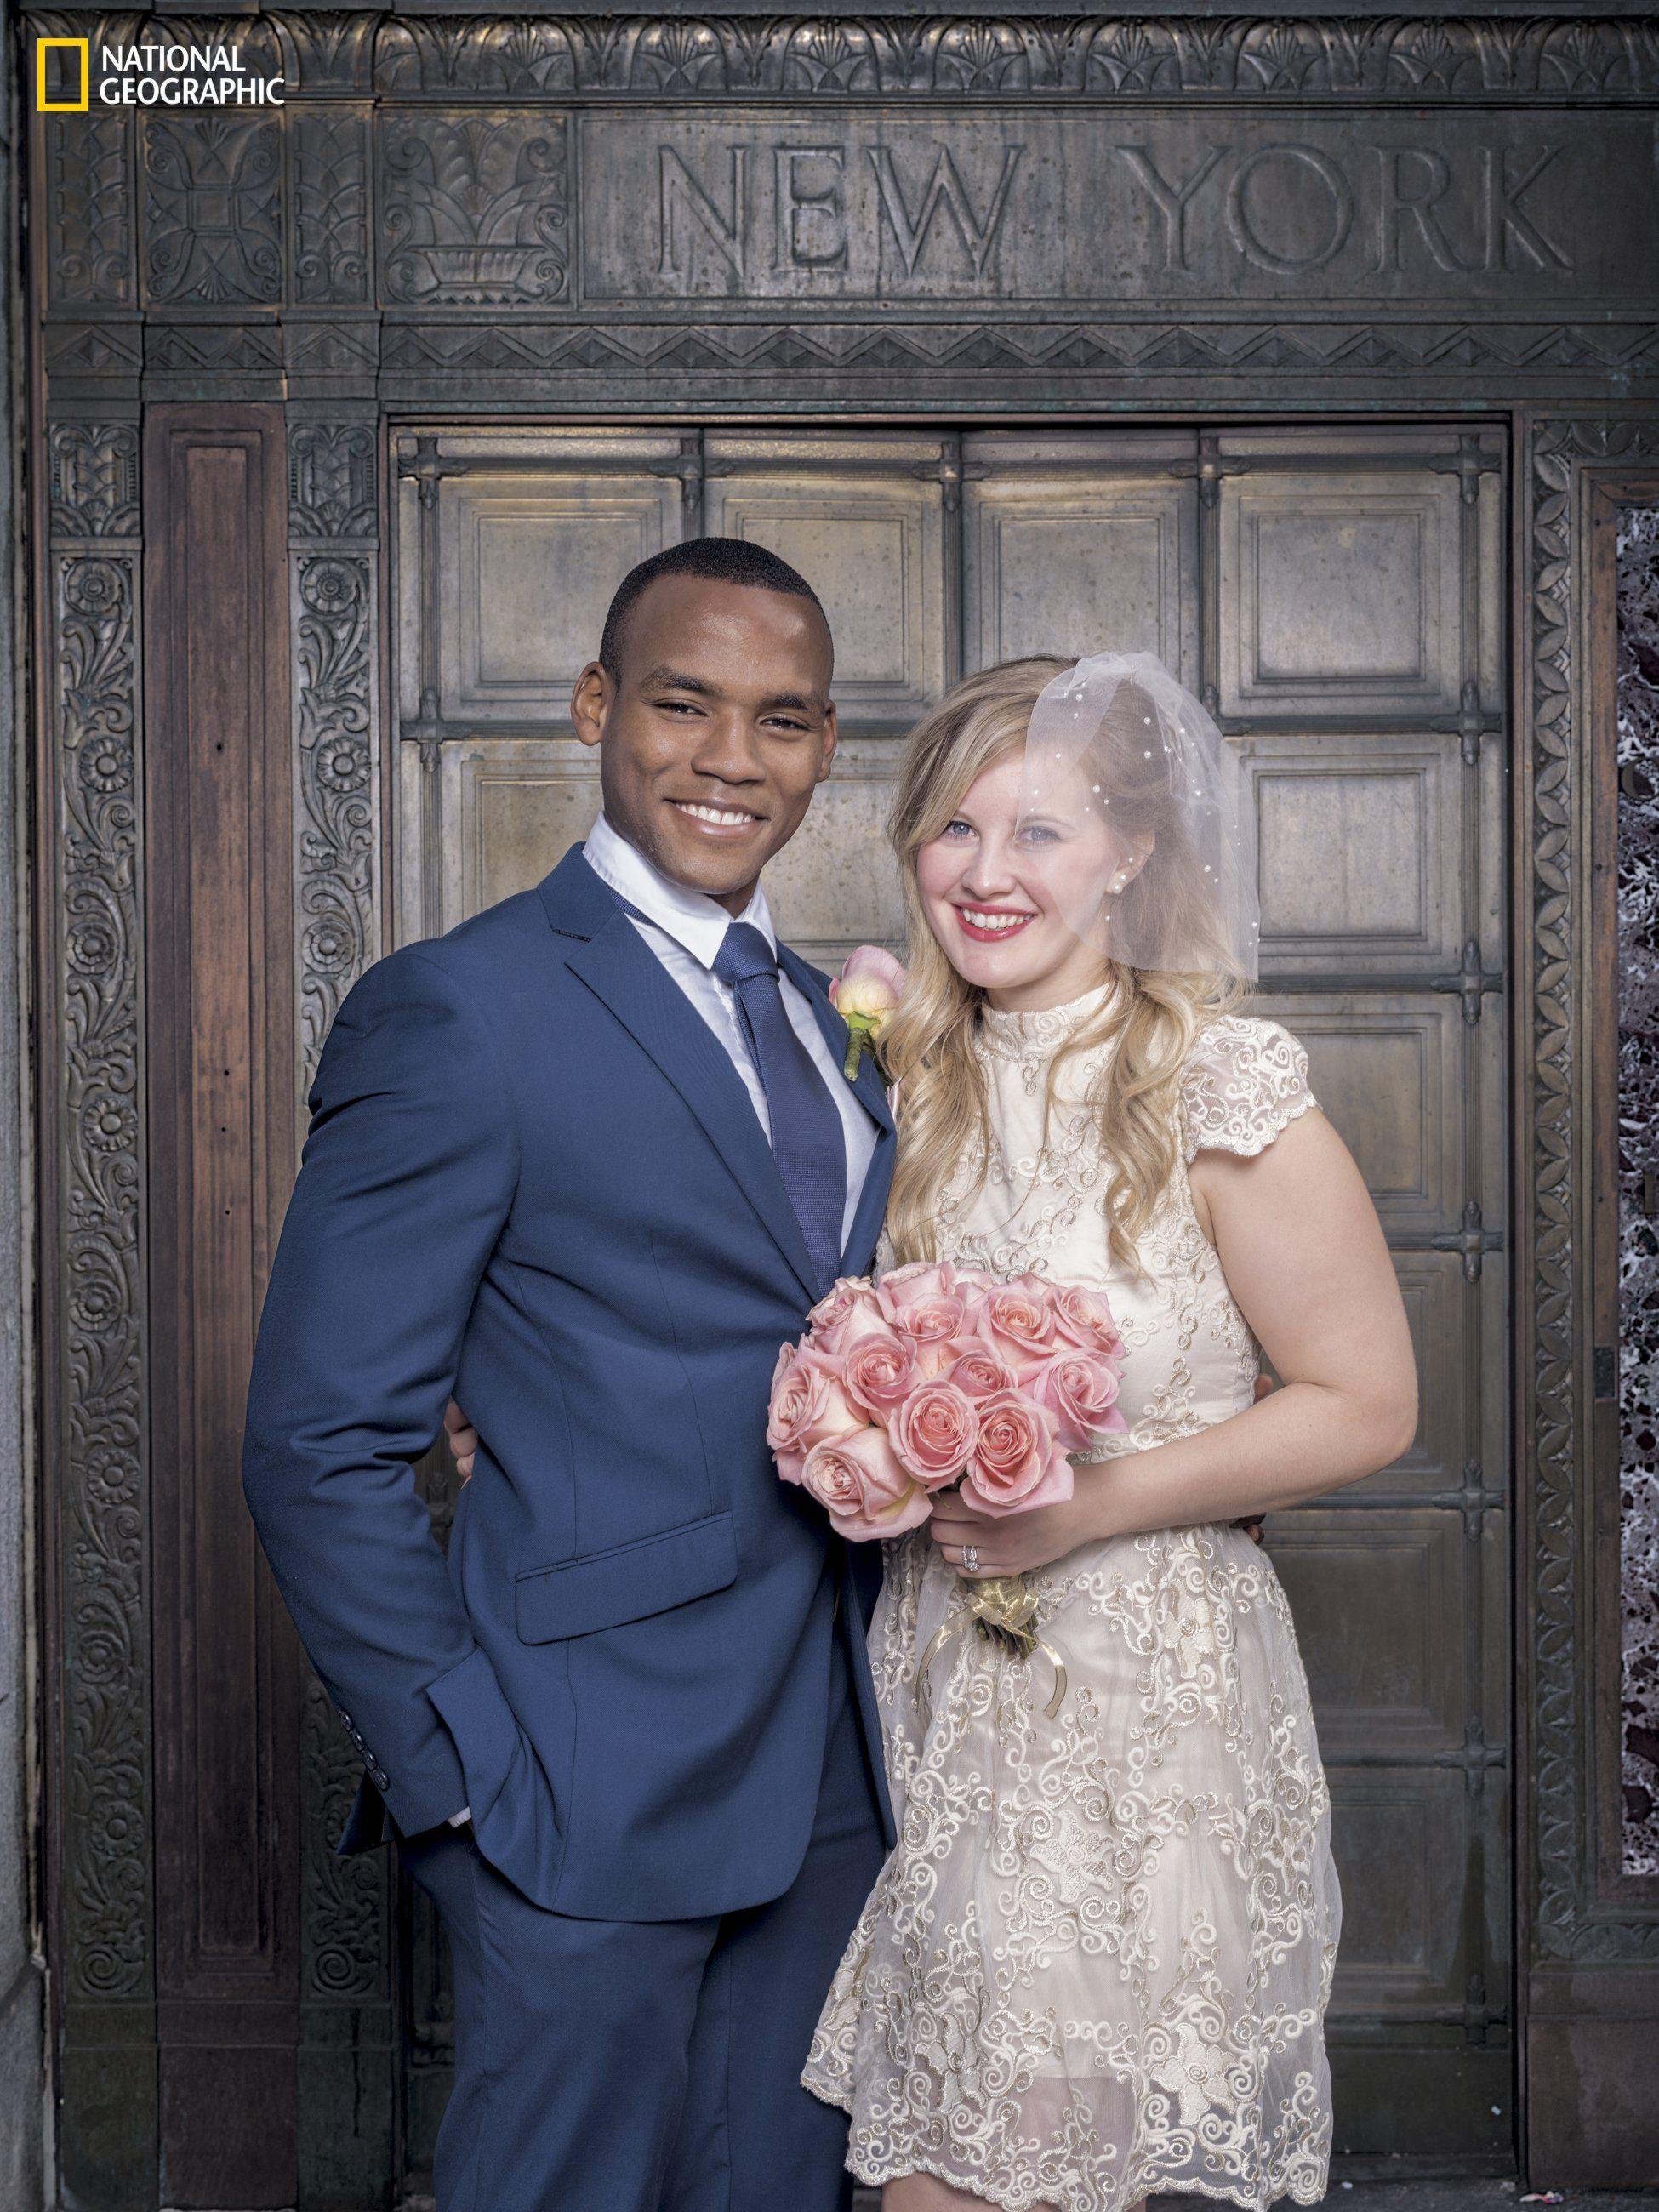 Interracial marriage photo